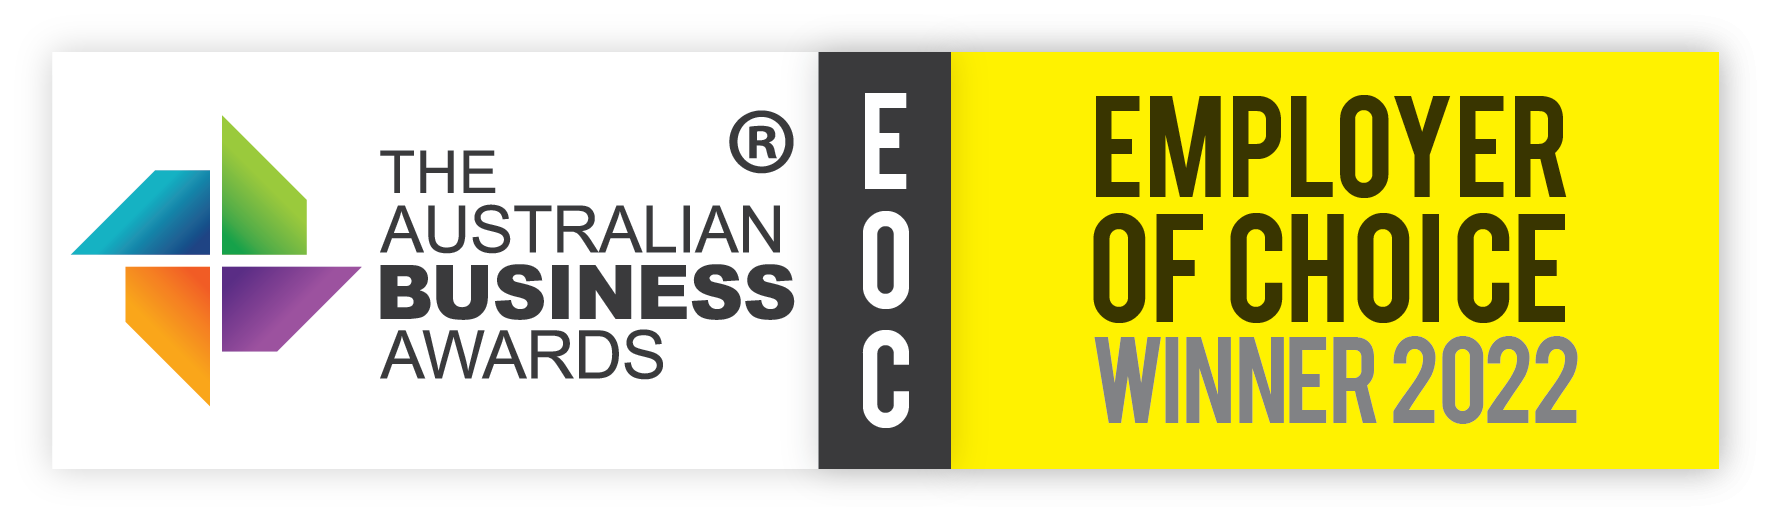 Winner for Employer of Choice in The Australian Business Awards 2022.